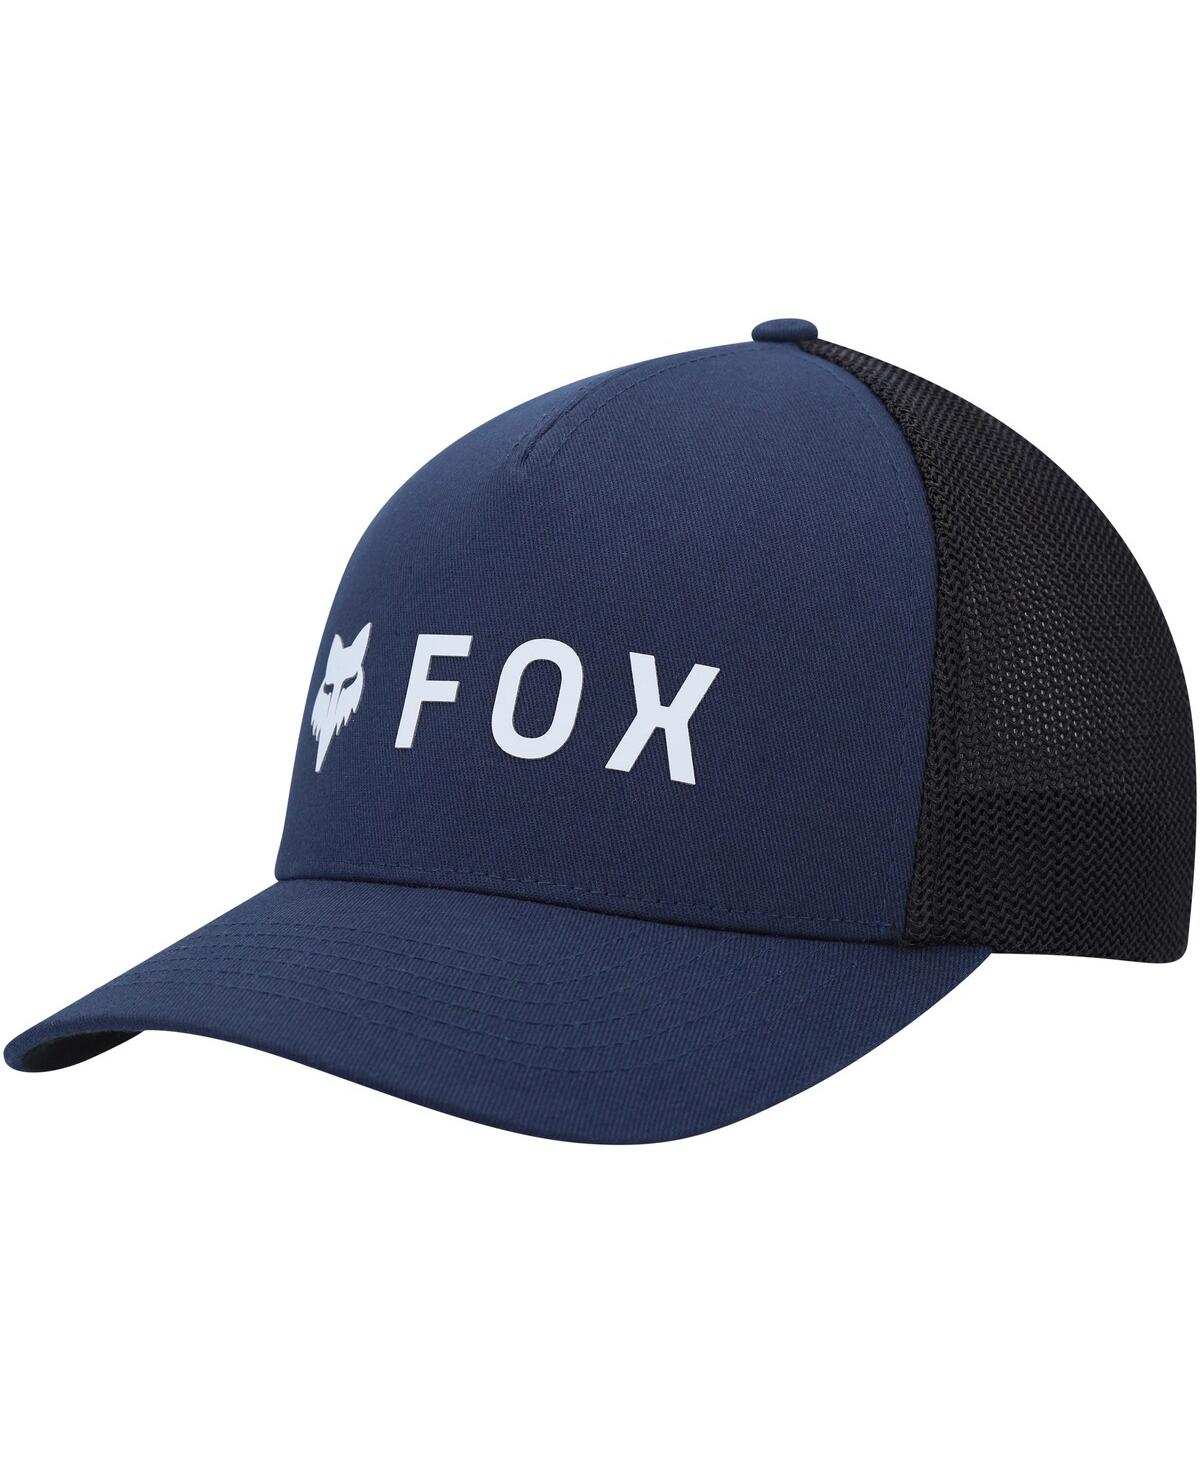 Men's Fox Navy Absolute Mesh Flex Hat - Navy